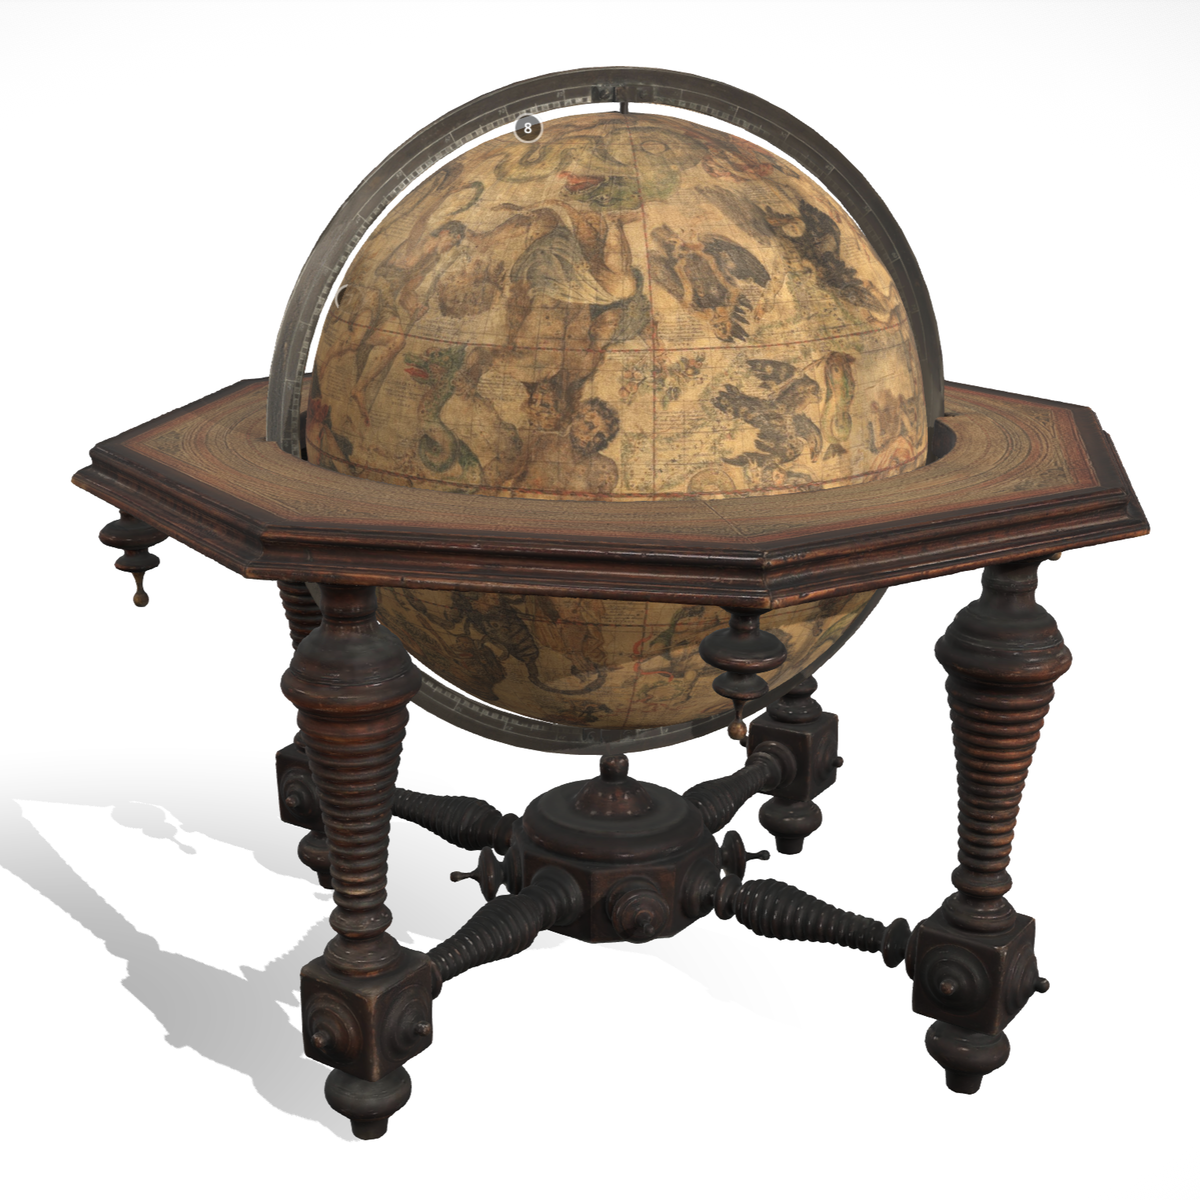 3D model of a historic globe.